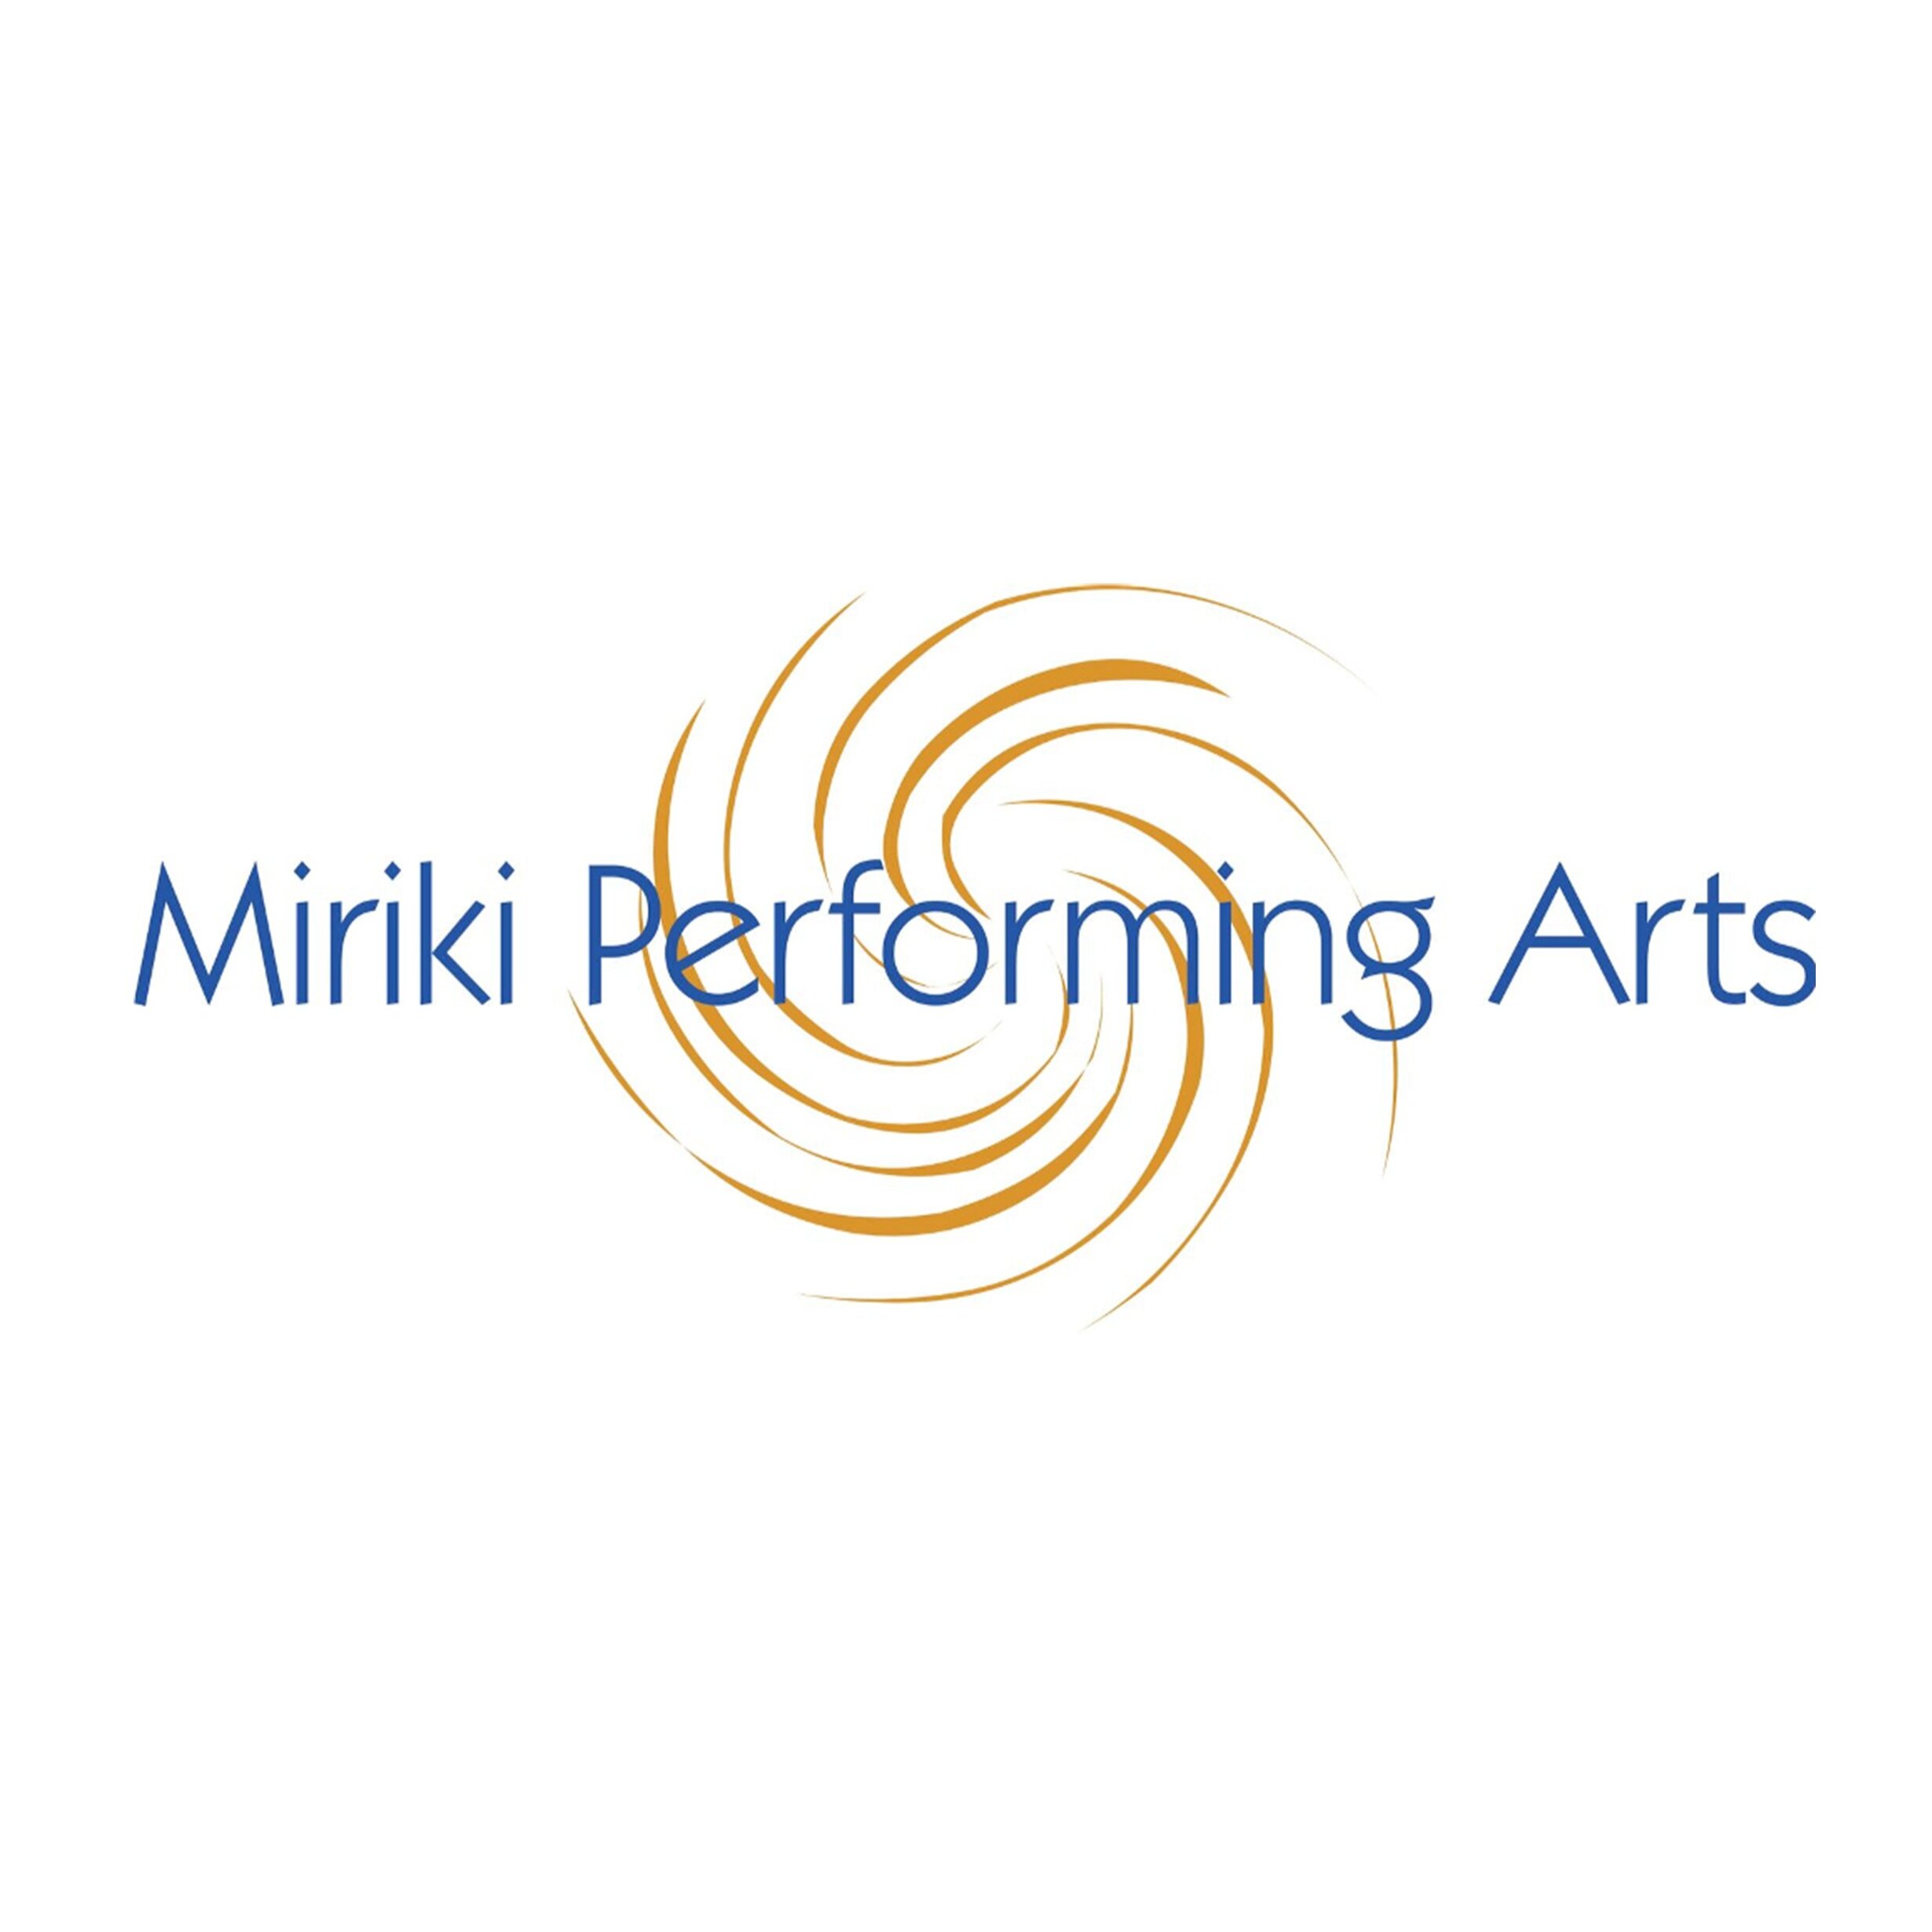 Miriki+Performing+Arts.jpg